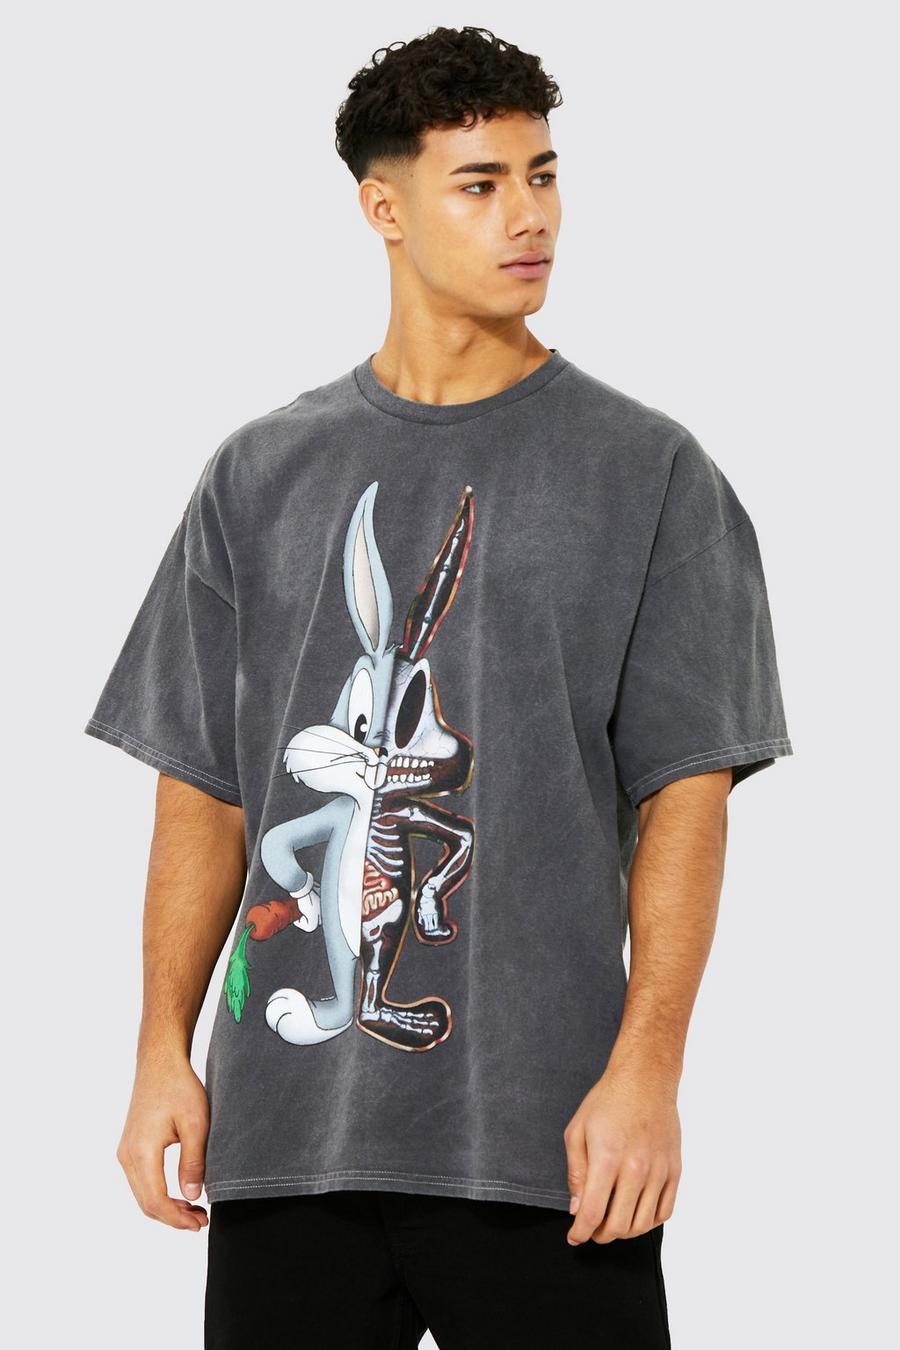 Charcoal grey Bugs Bunny Oversize t-shirt